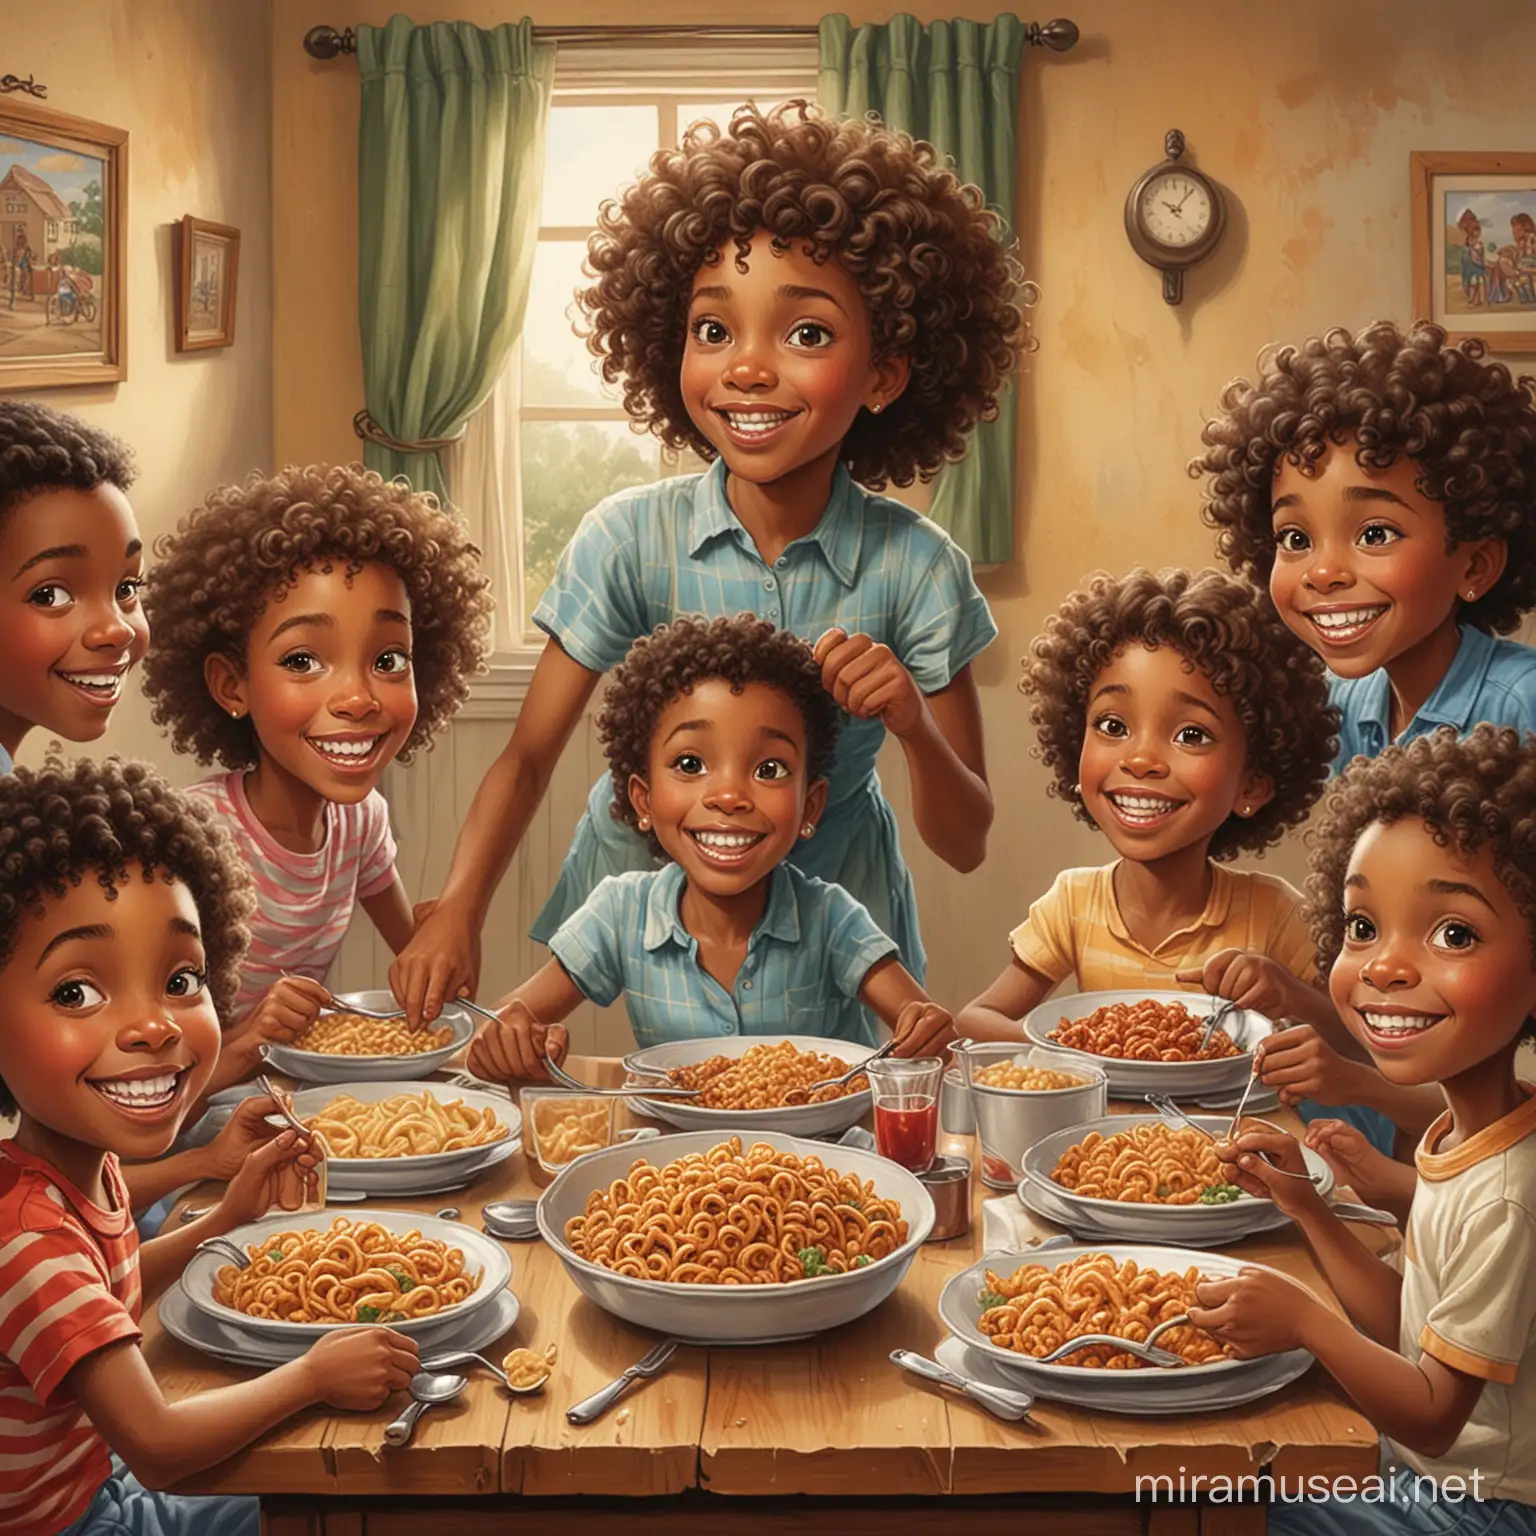 Joyful African American Children Enjoying Food with Friends in Vibrant Cartoon Style Scene